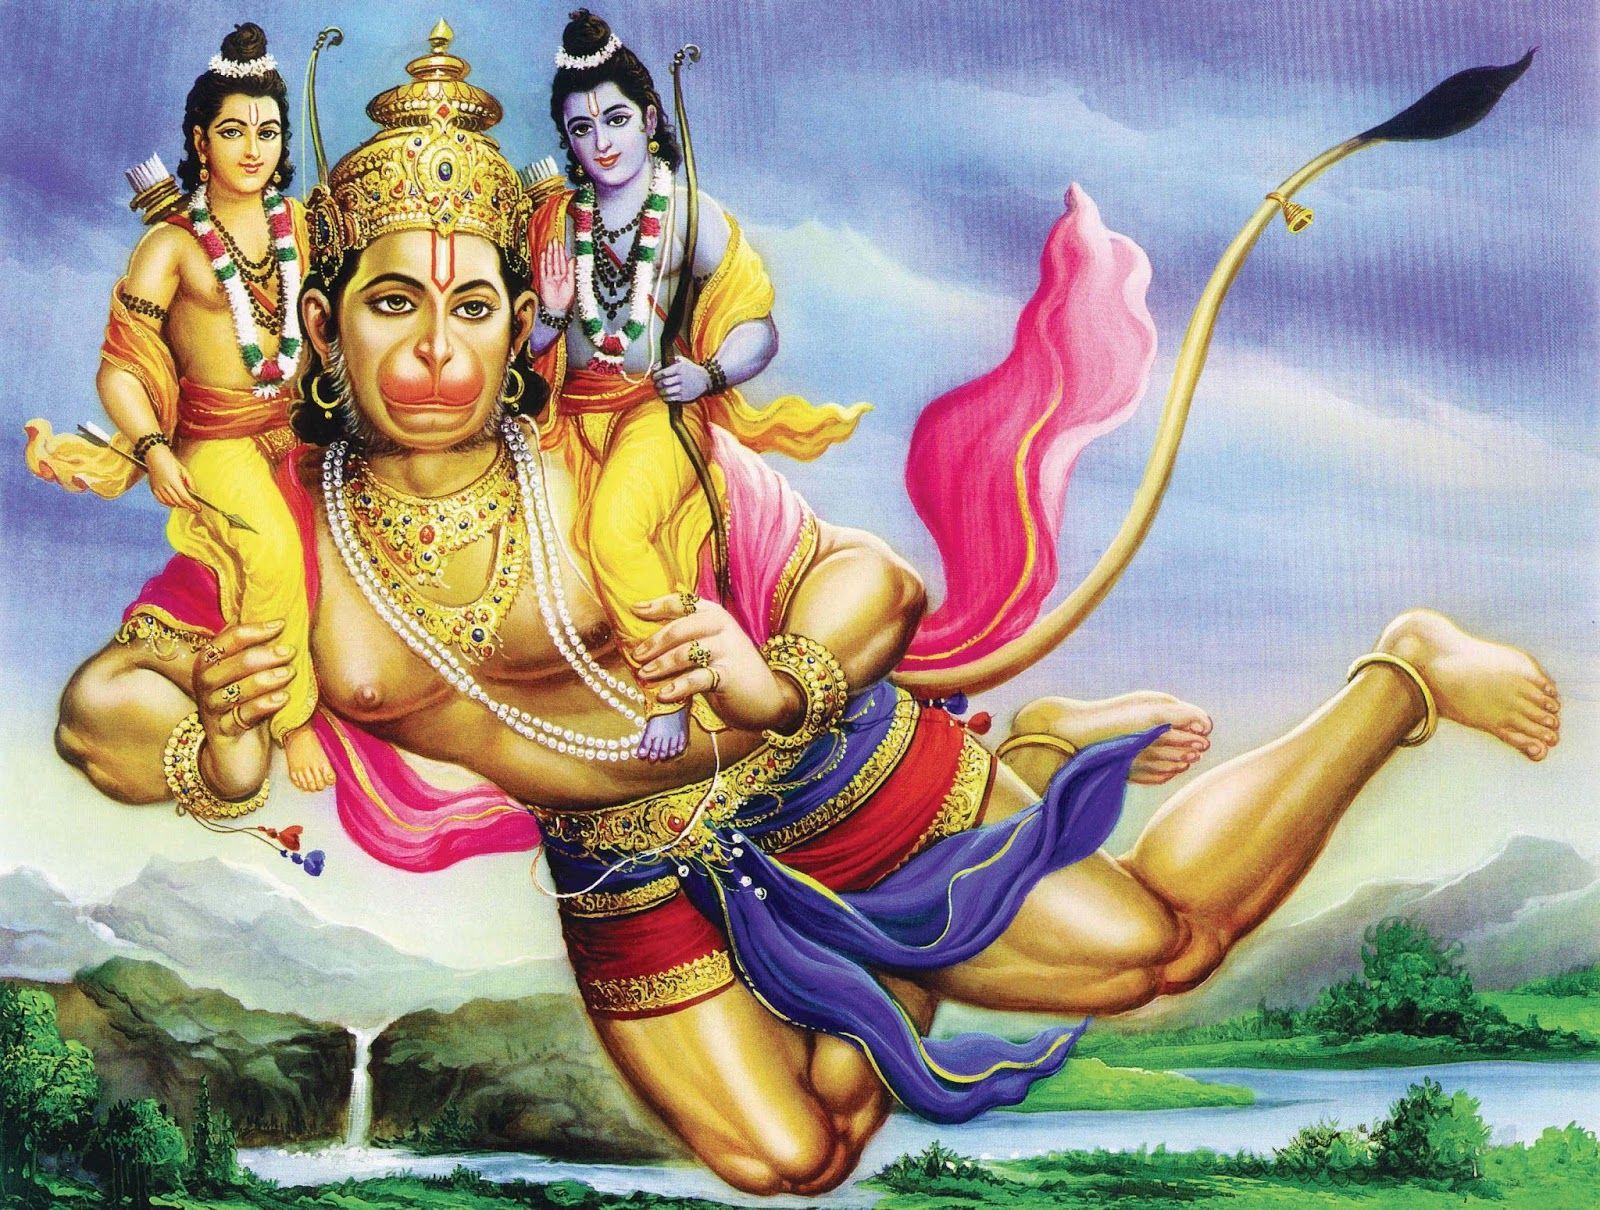 The Fresh Wallpaper: New HD image of Hanumanji Free Download